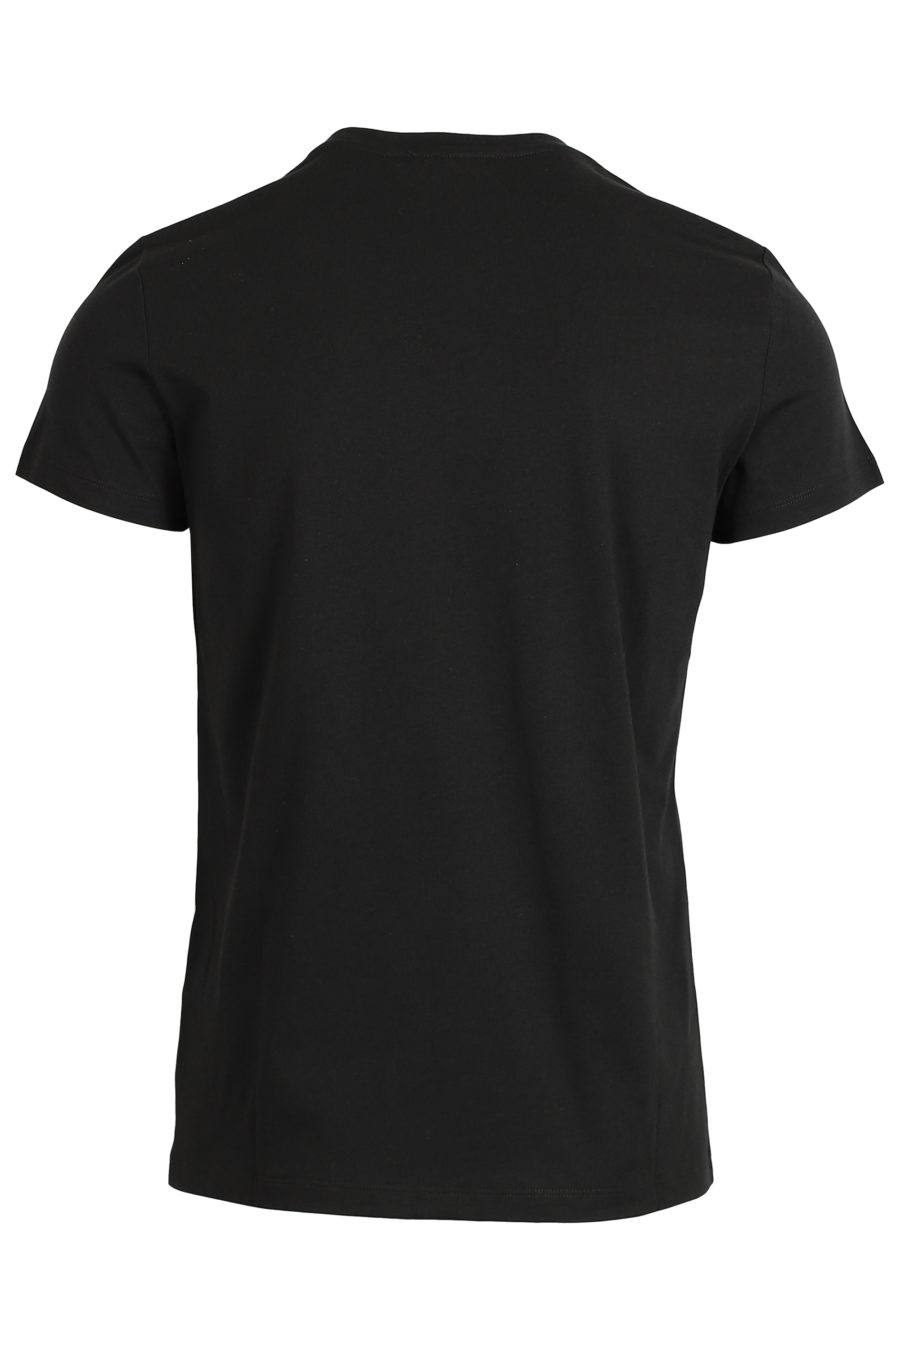 Camiseta negra con logotipo blanco terciopelo - IMG 3616